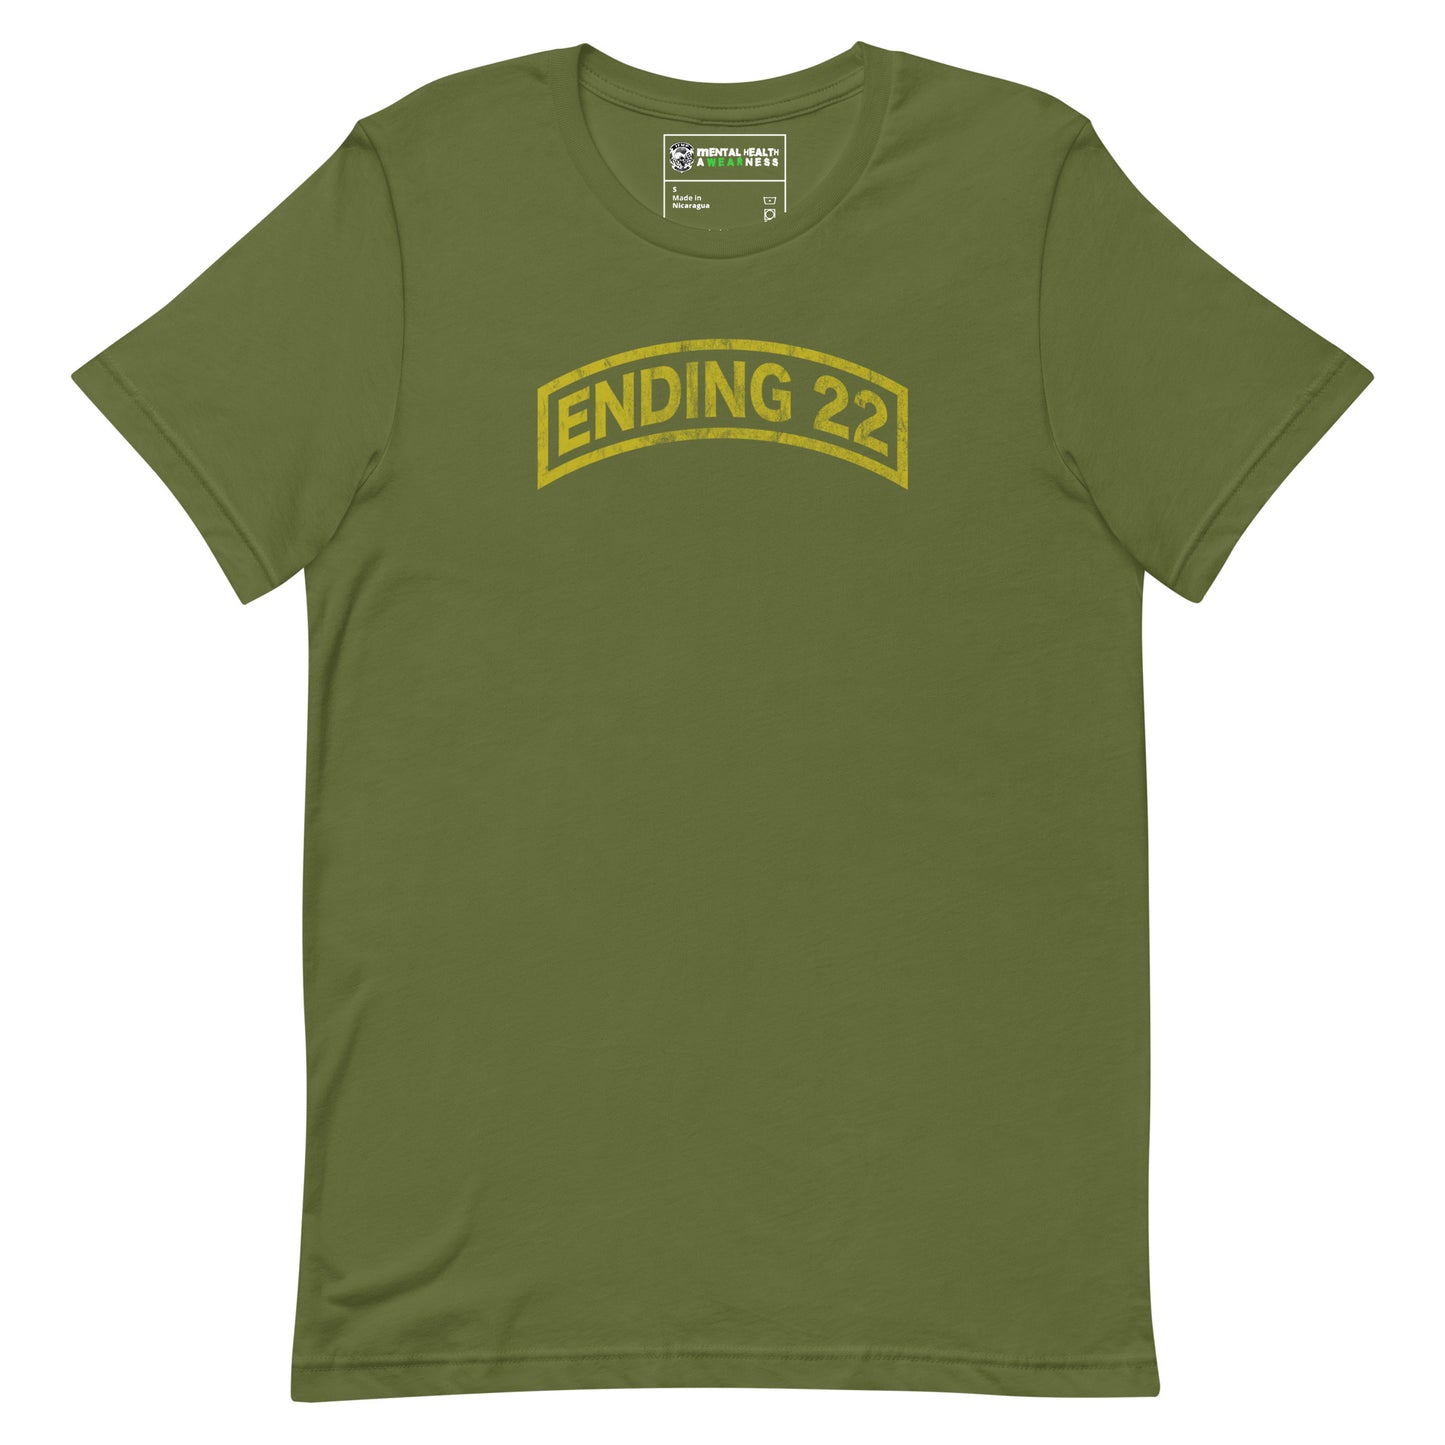 ENDING 22 US Army Ranger Tab Edition T-Shirt